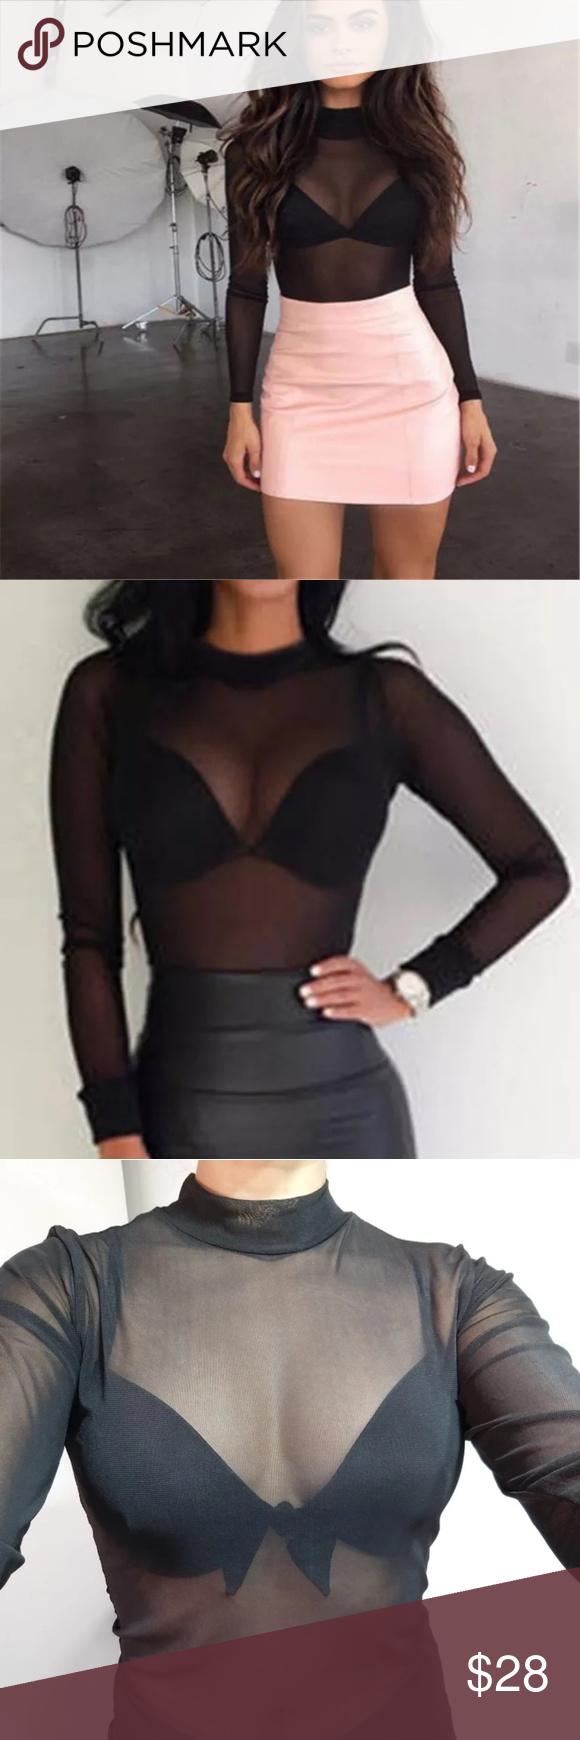 New with tags long sleeve sheer black shirt Cute sexy long sleeve black sheer sh…